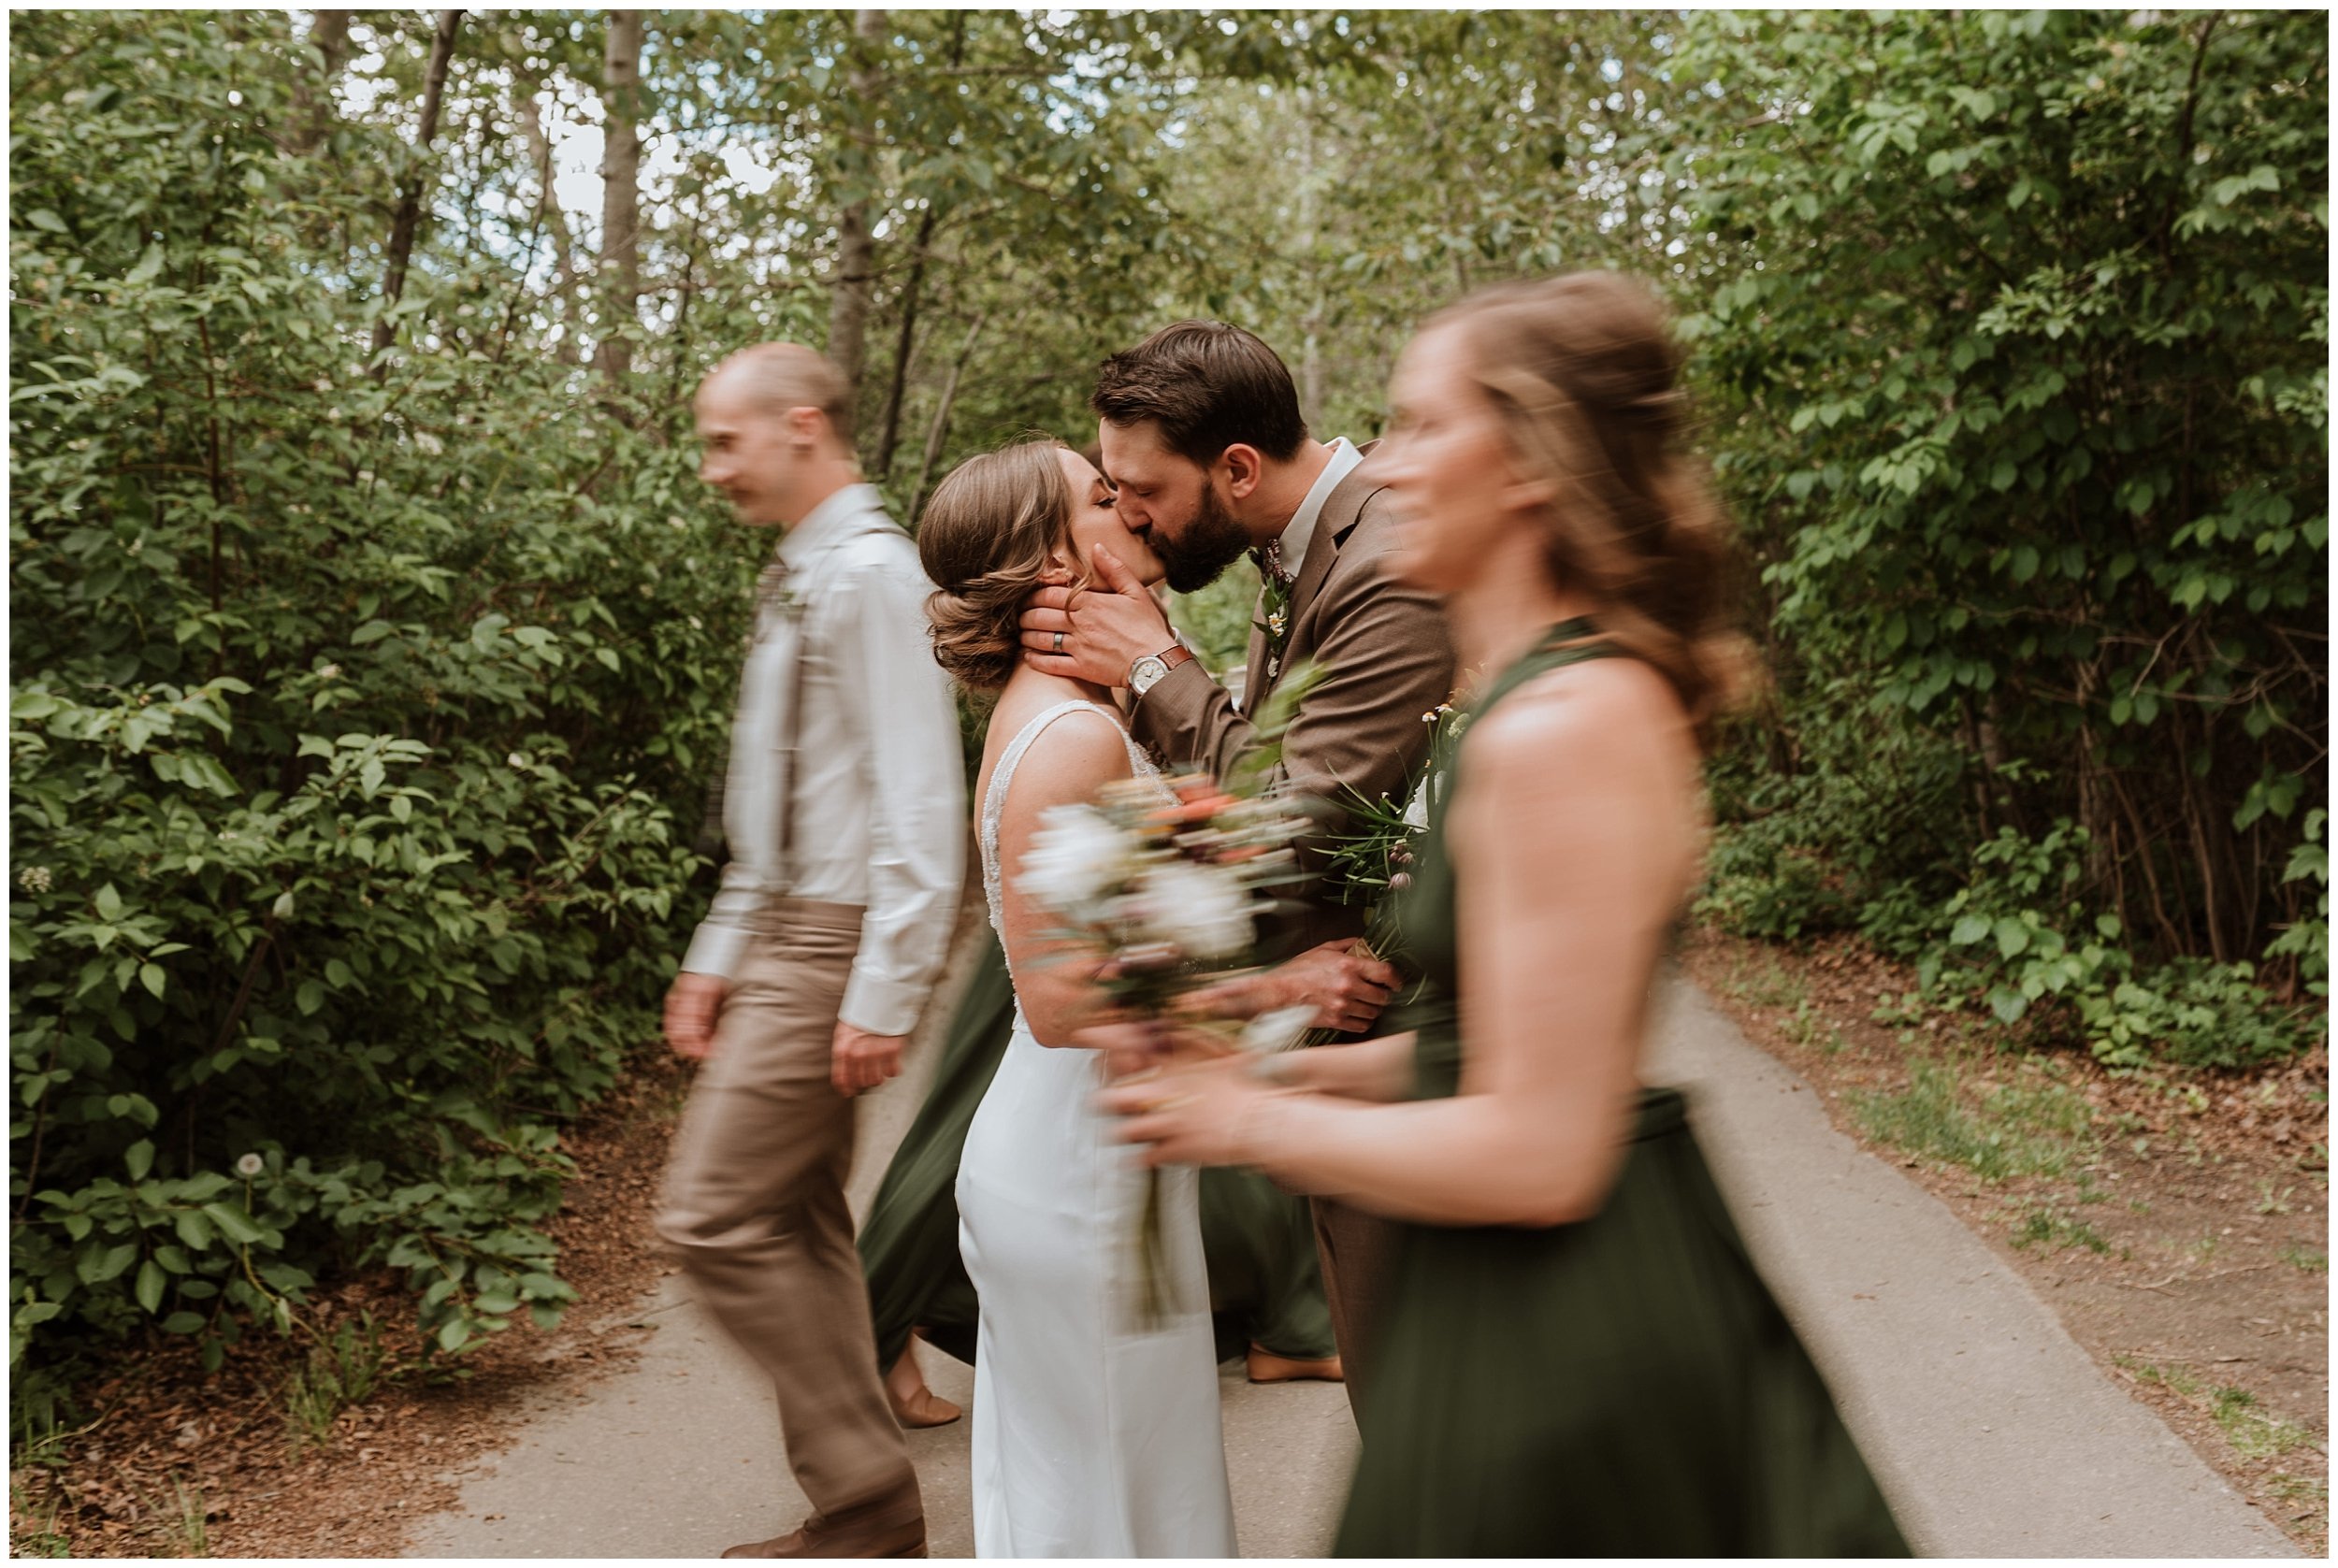 Motion blur wedding photo